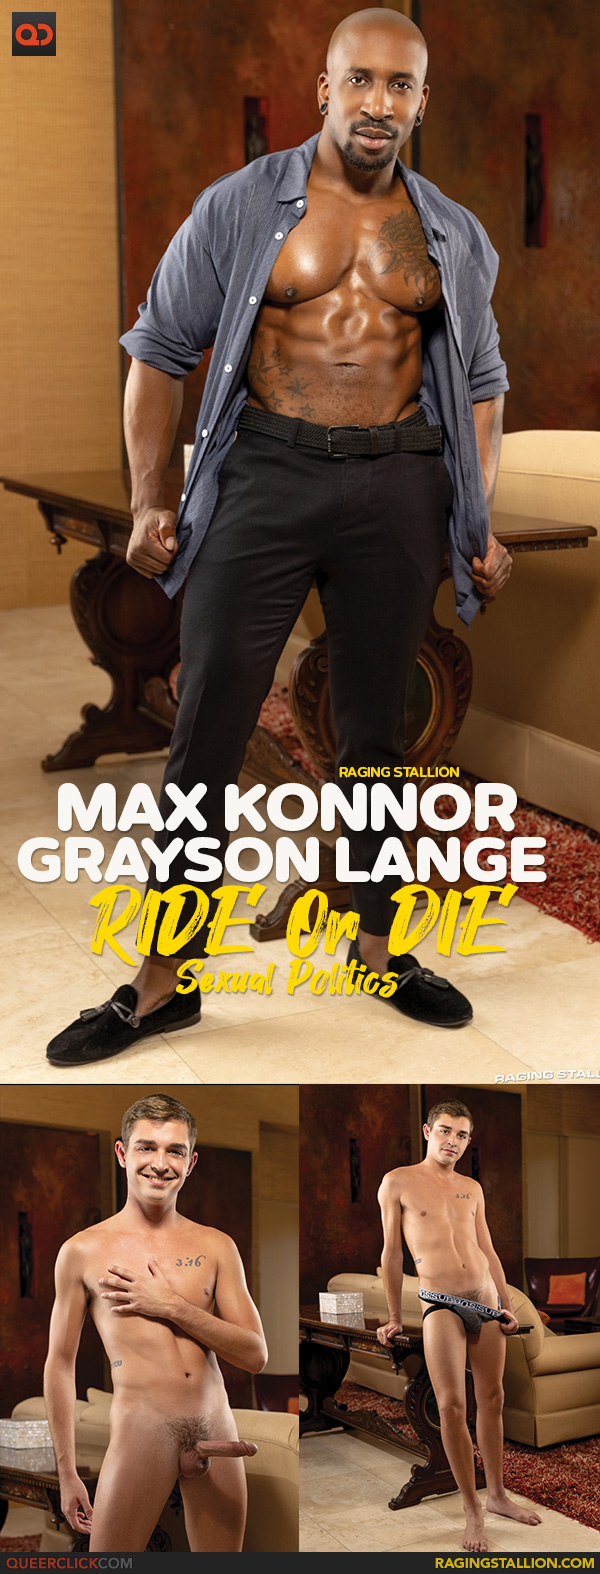 Raging Stallion: Max Konnor and Grayson Lange - RIDE Or DIE: Sexual Politics